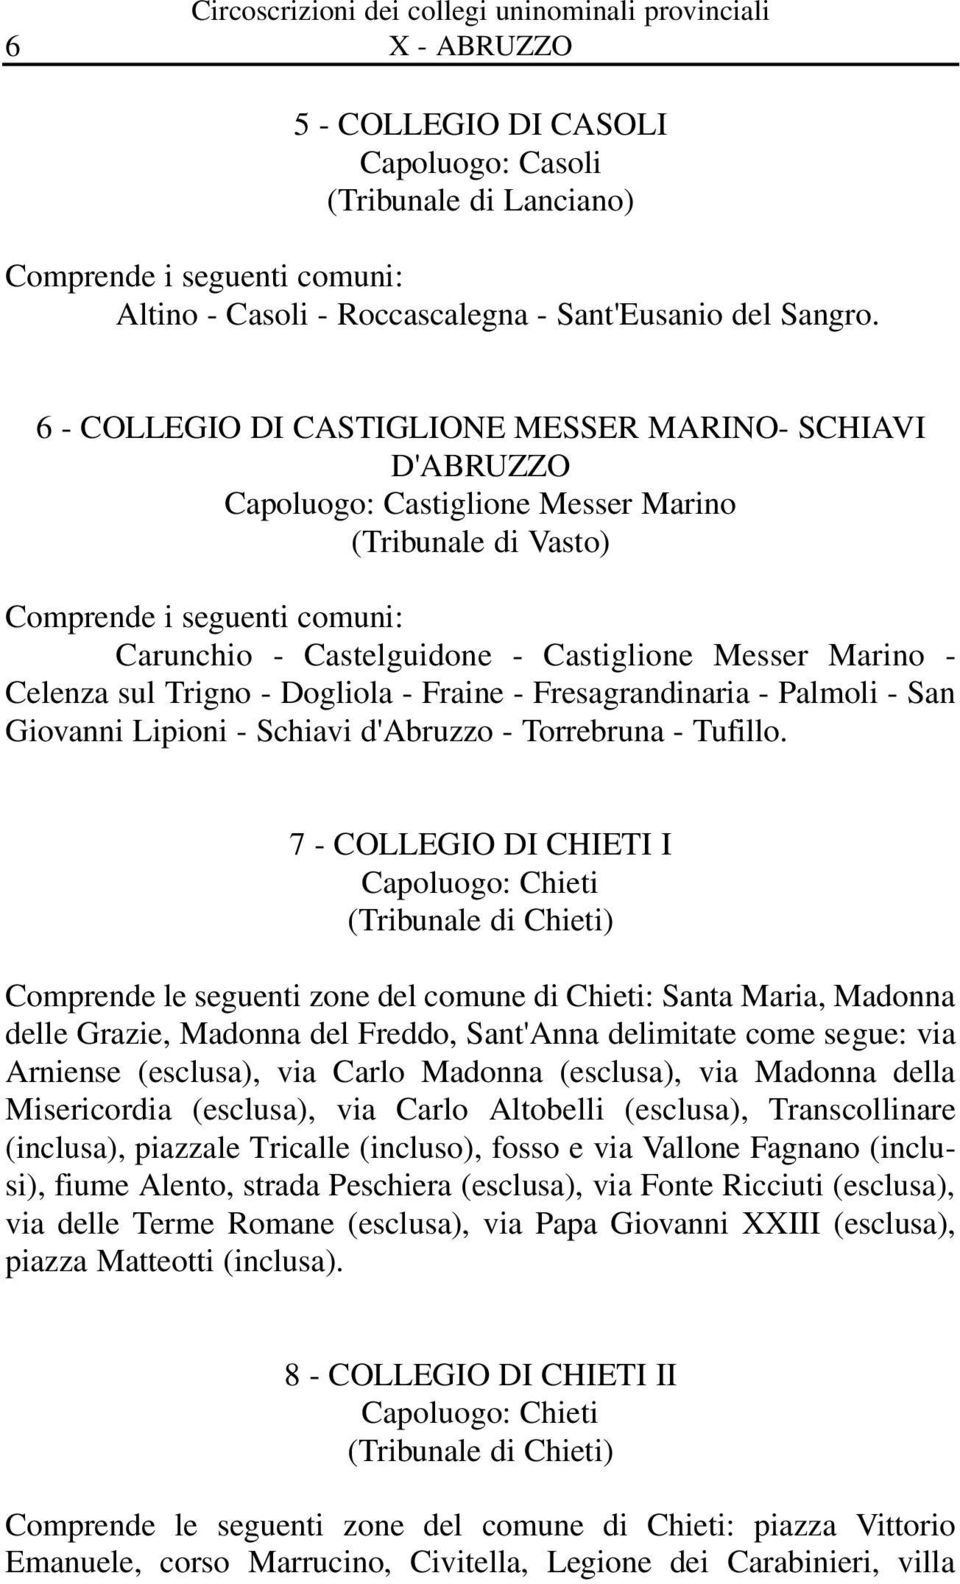 Dogliola - Fraine - Fresagrandinaria - Palmoli - San Giovanni Lipioni - Schiavi d'abruzzo - Torrebruna - Tufillo.